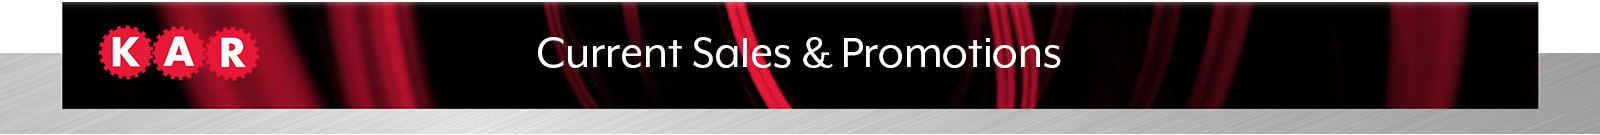 Current Sales & Promotions BANNER